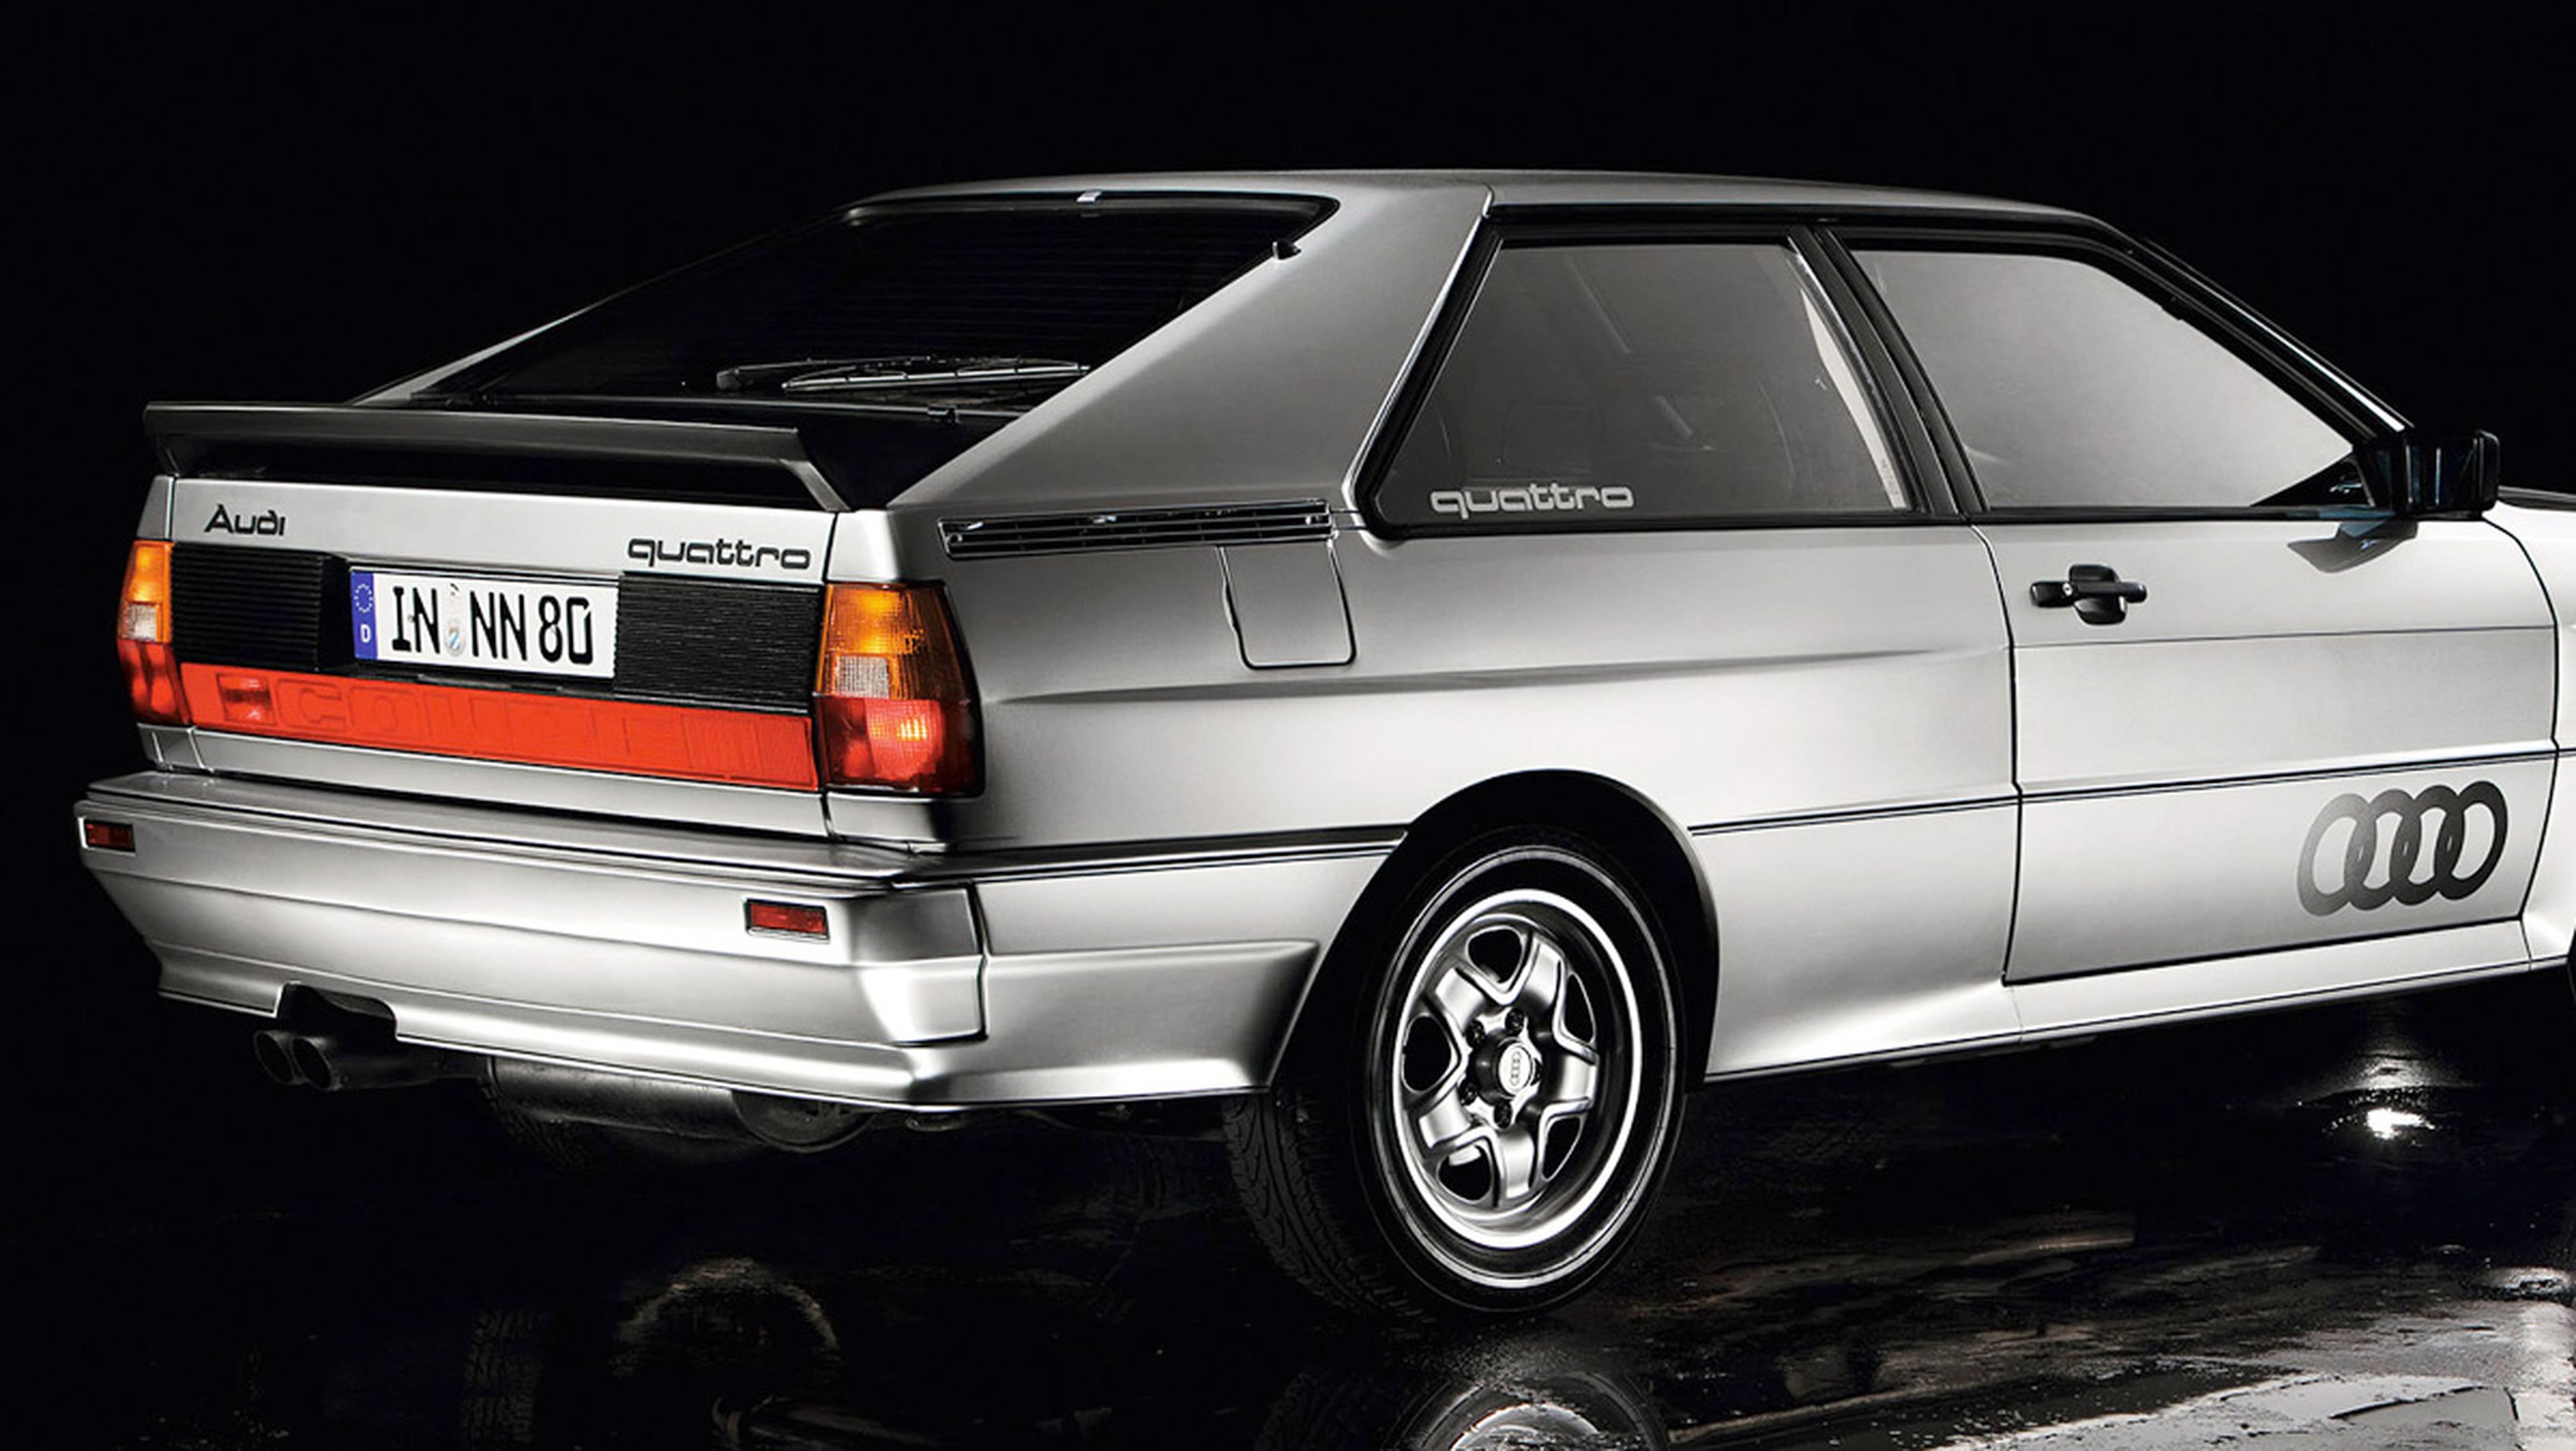 Viejas glorias: la historia del Audi Quattro